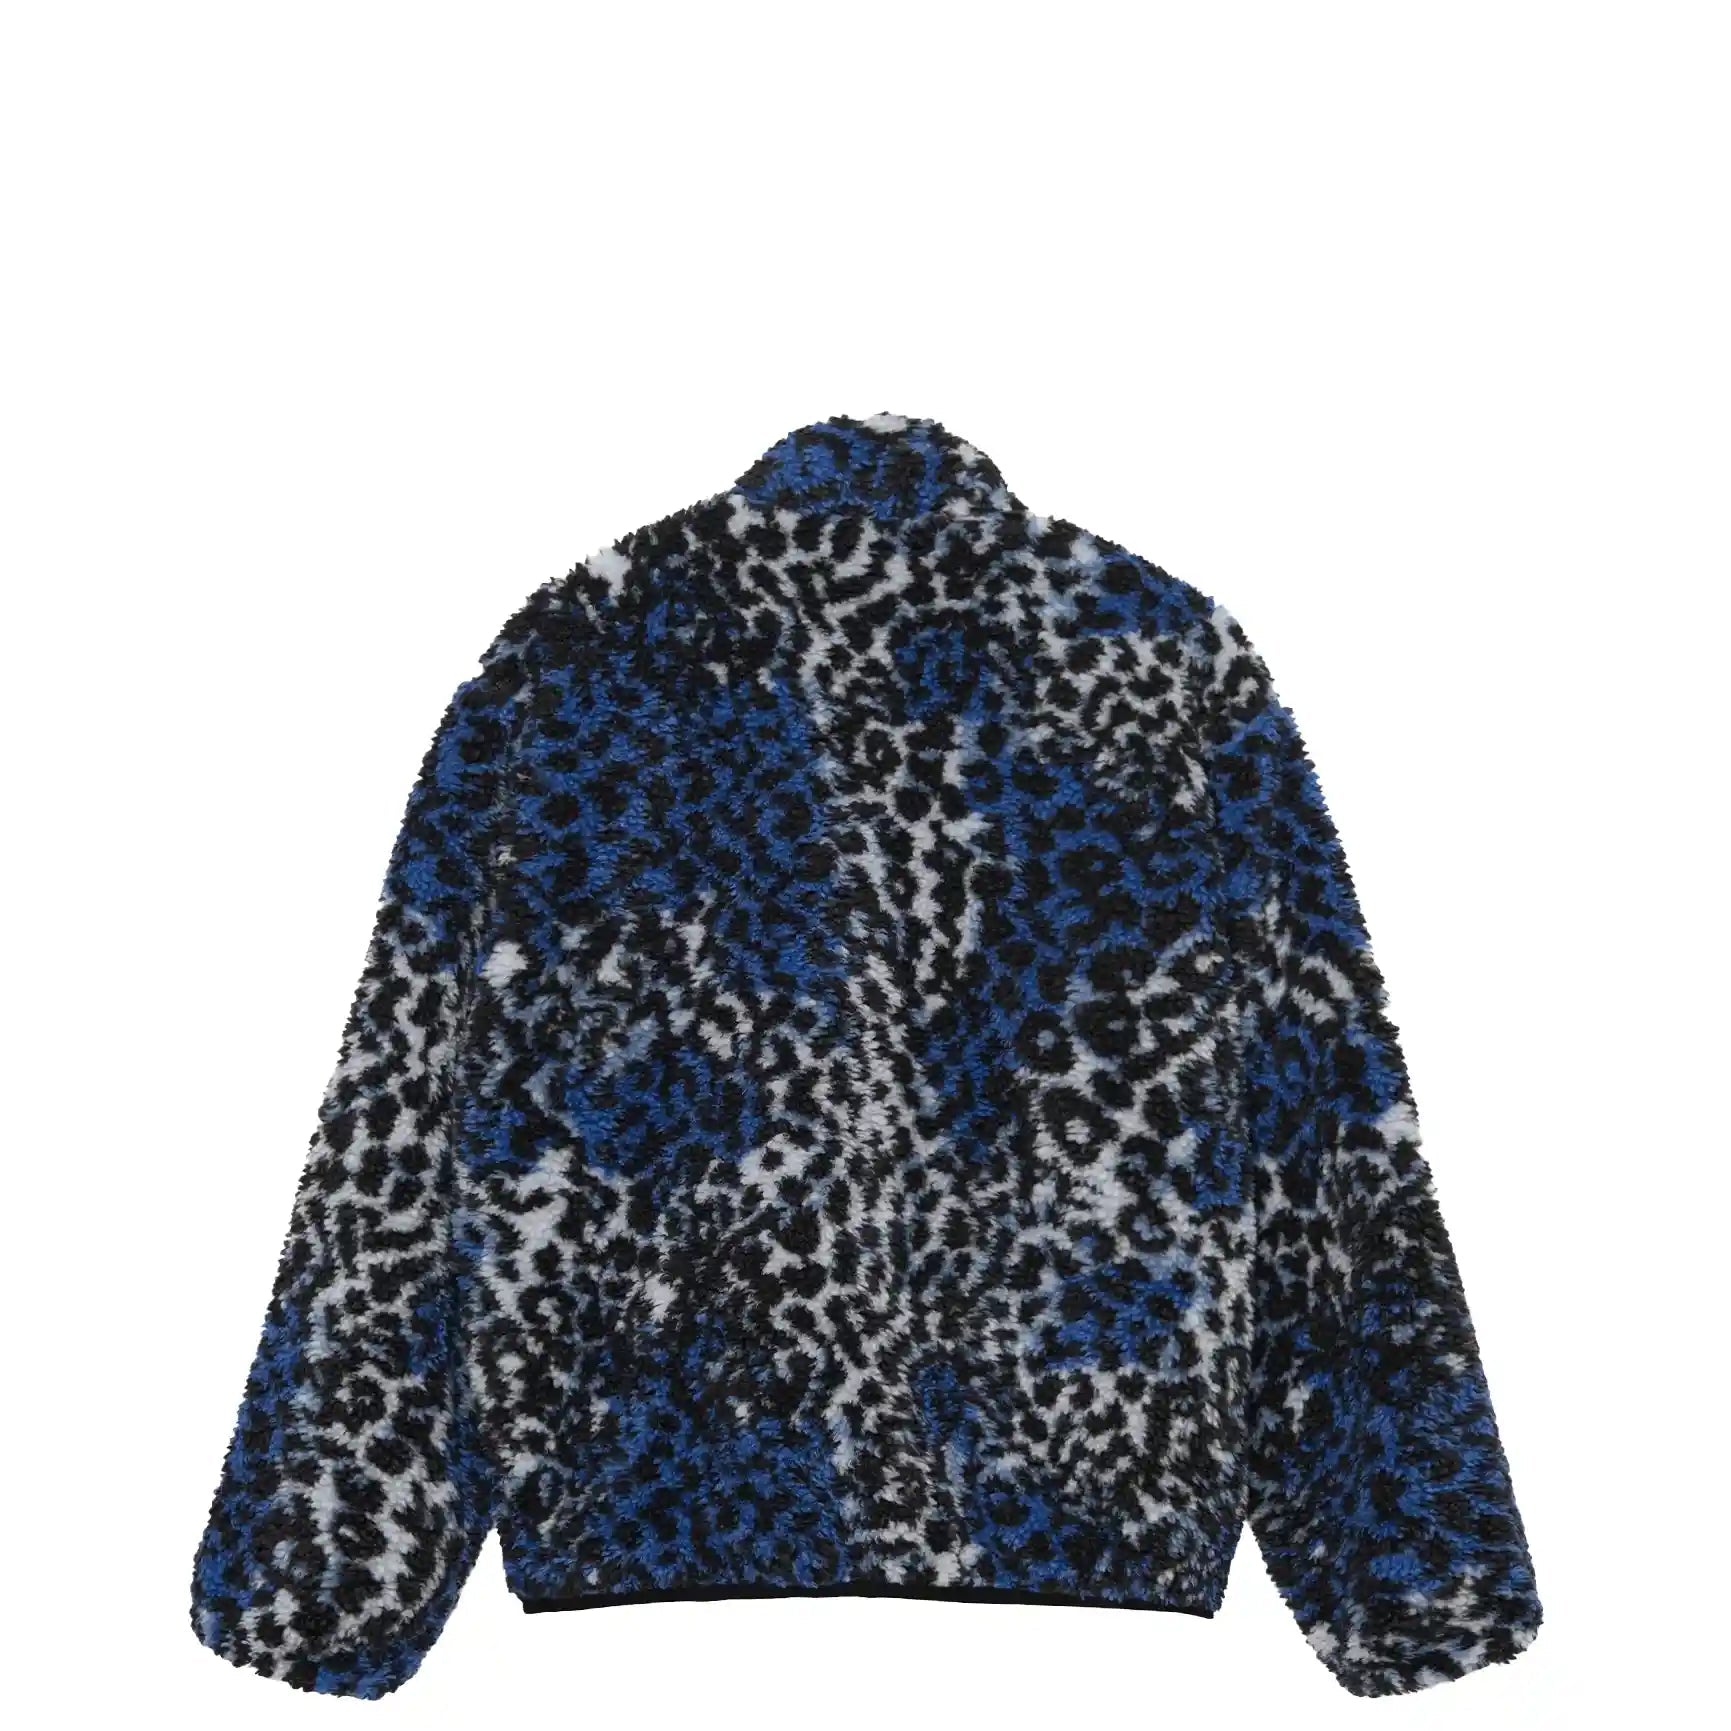 Stussy Sherpa Reversible Jacket, blue leopard - Tiki Room Skateboards - 2